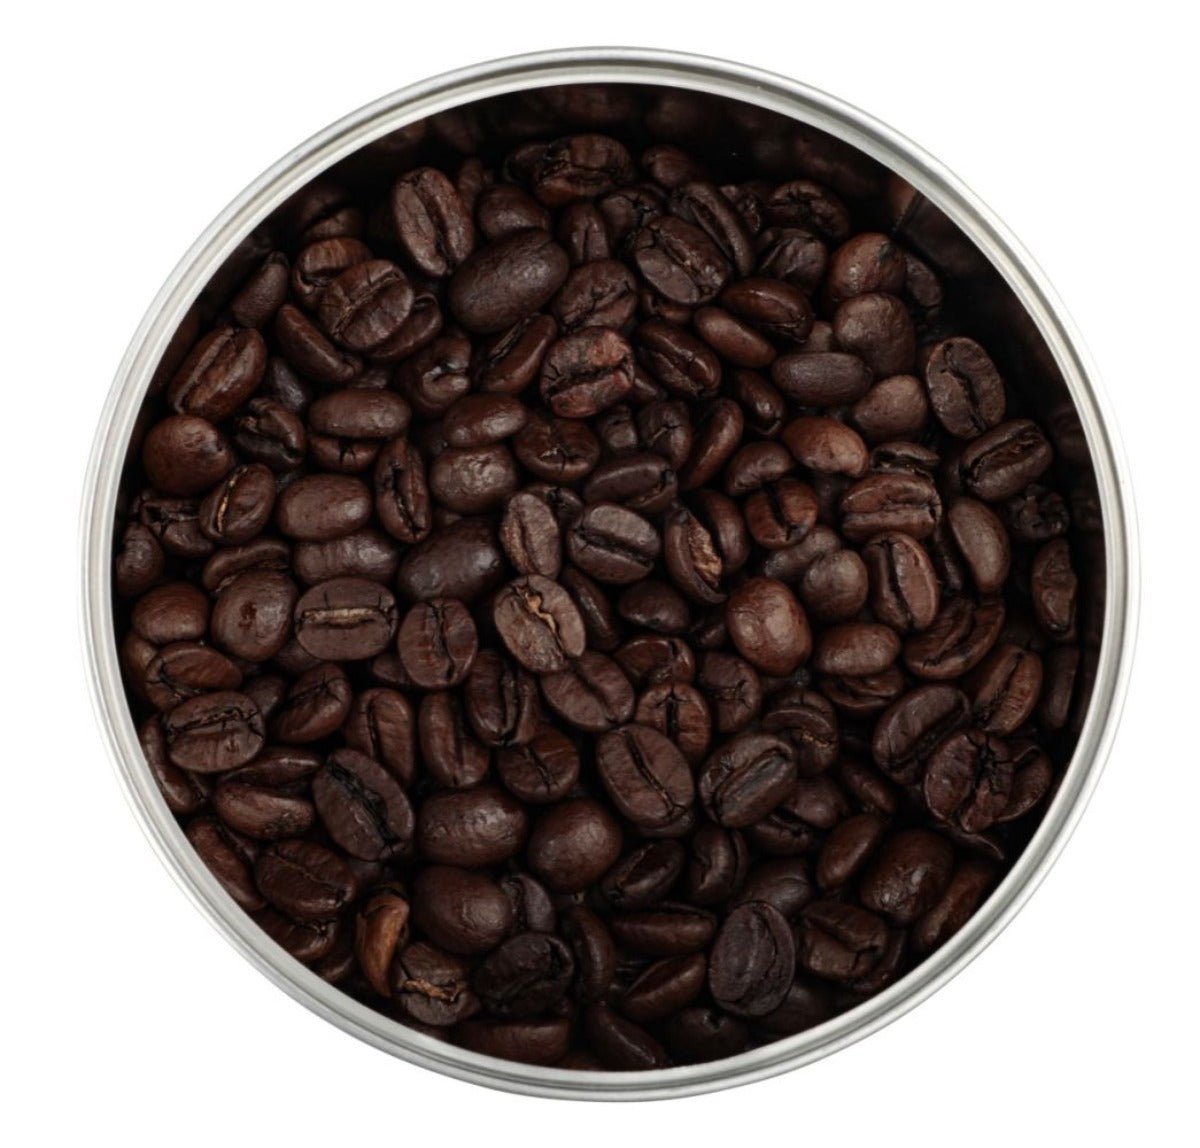 BIO BEANS - Whole beans coffee - MOGI - The Luxury Italian Coffee